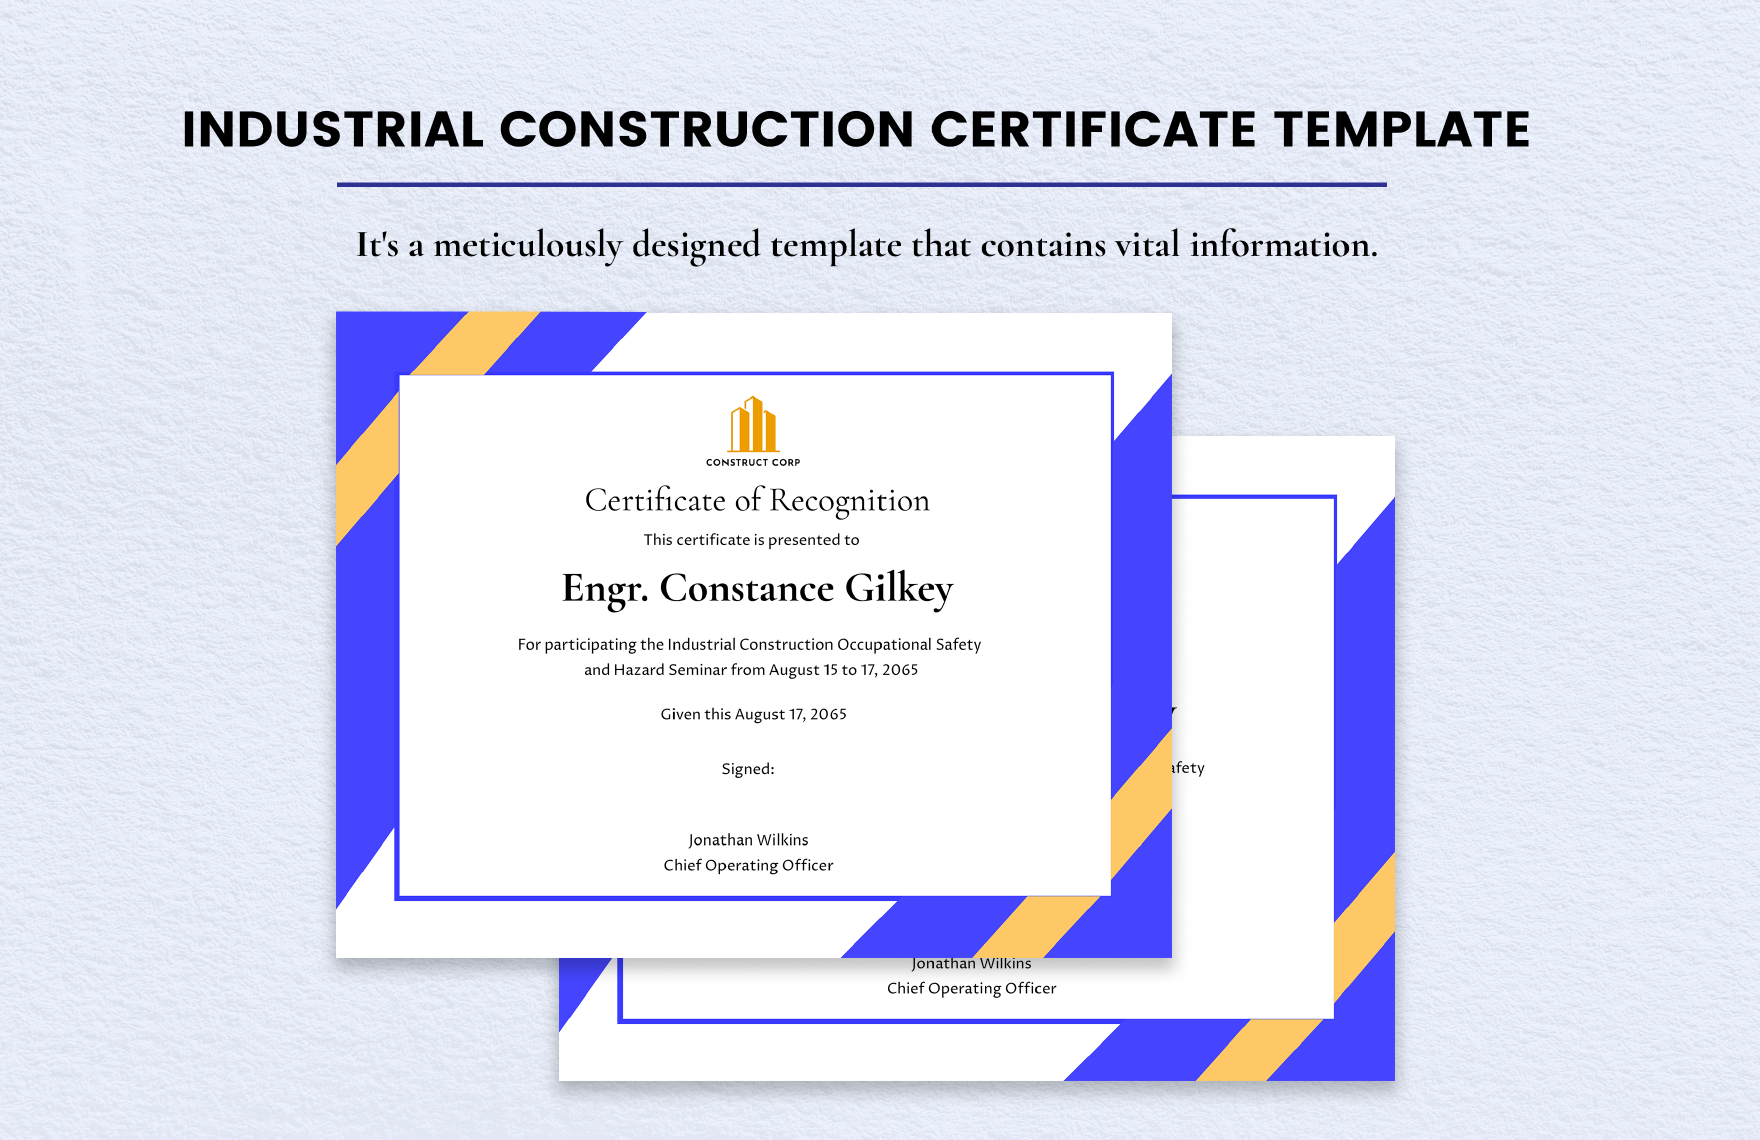 Industrial Construction Certificate